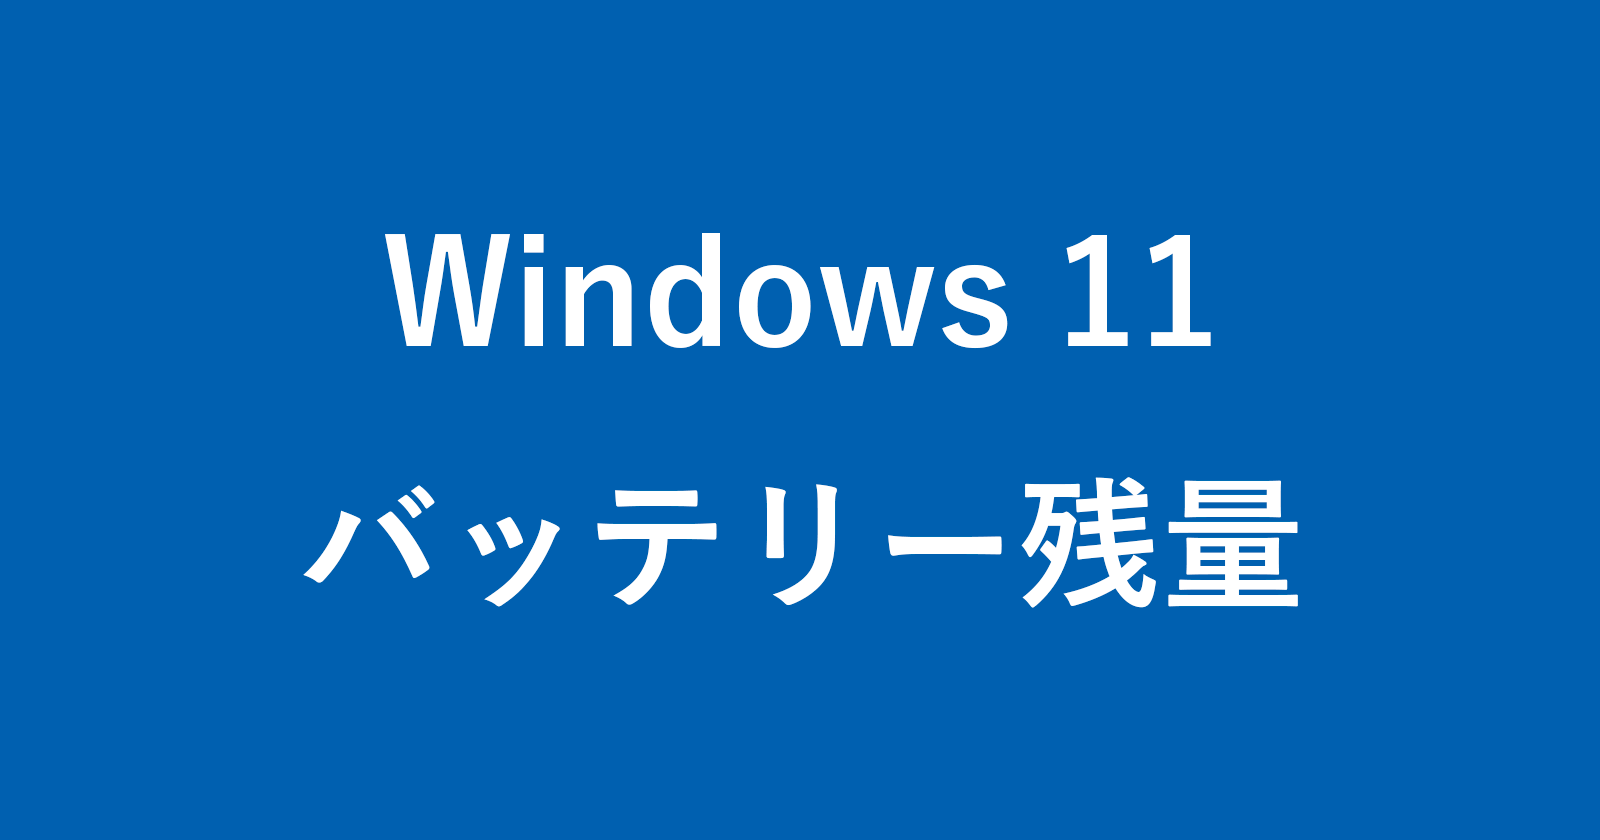 windows 11 battery